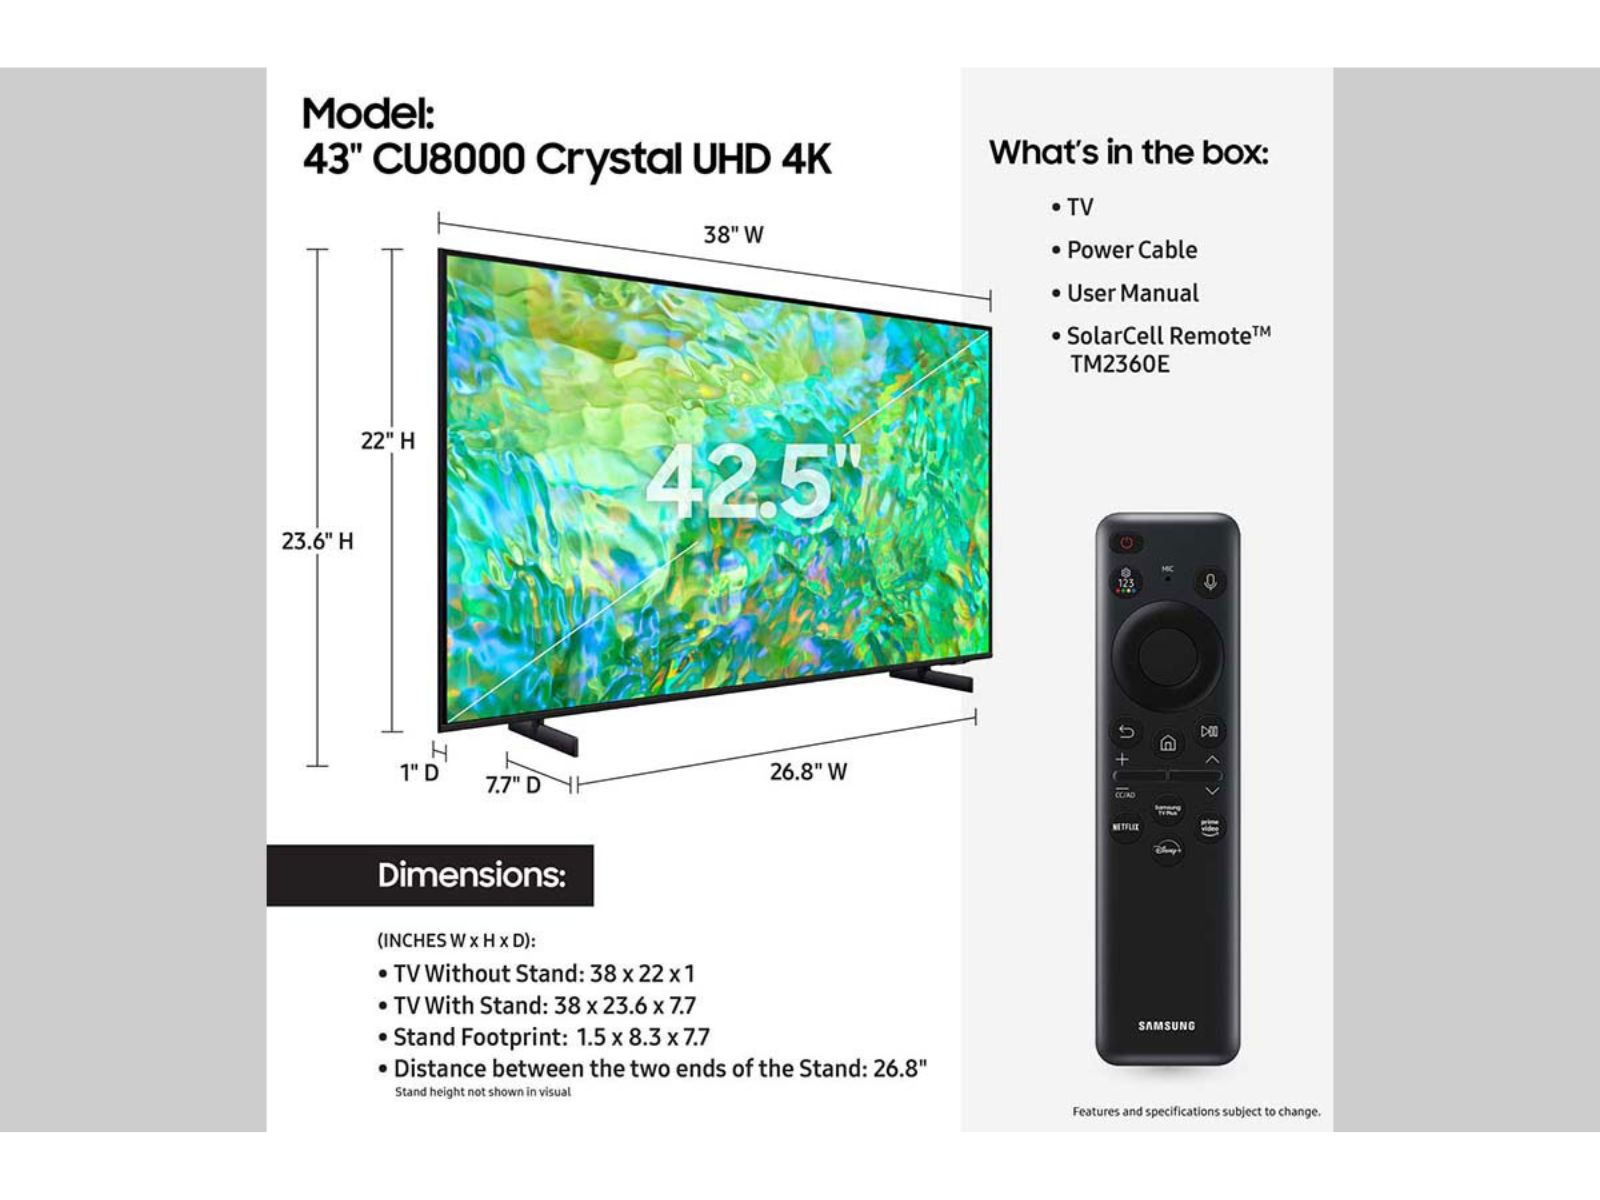 ᐅ Televisor Samsung Smart TV LED 43 UHD 4K de Samsung